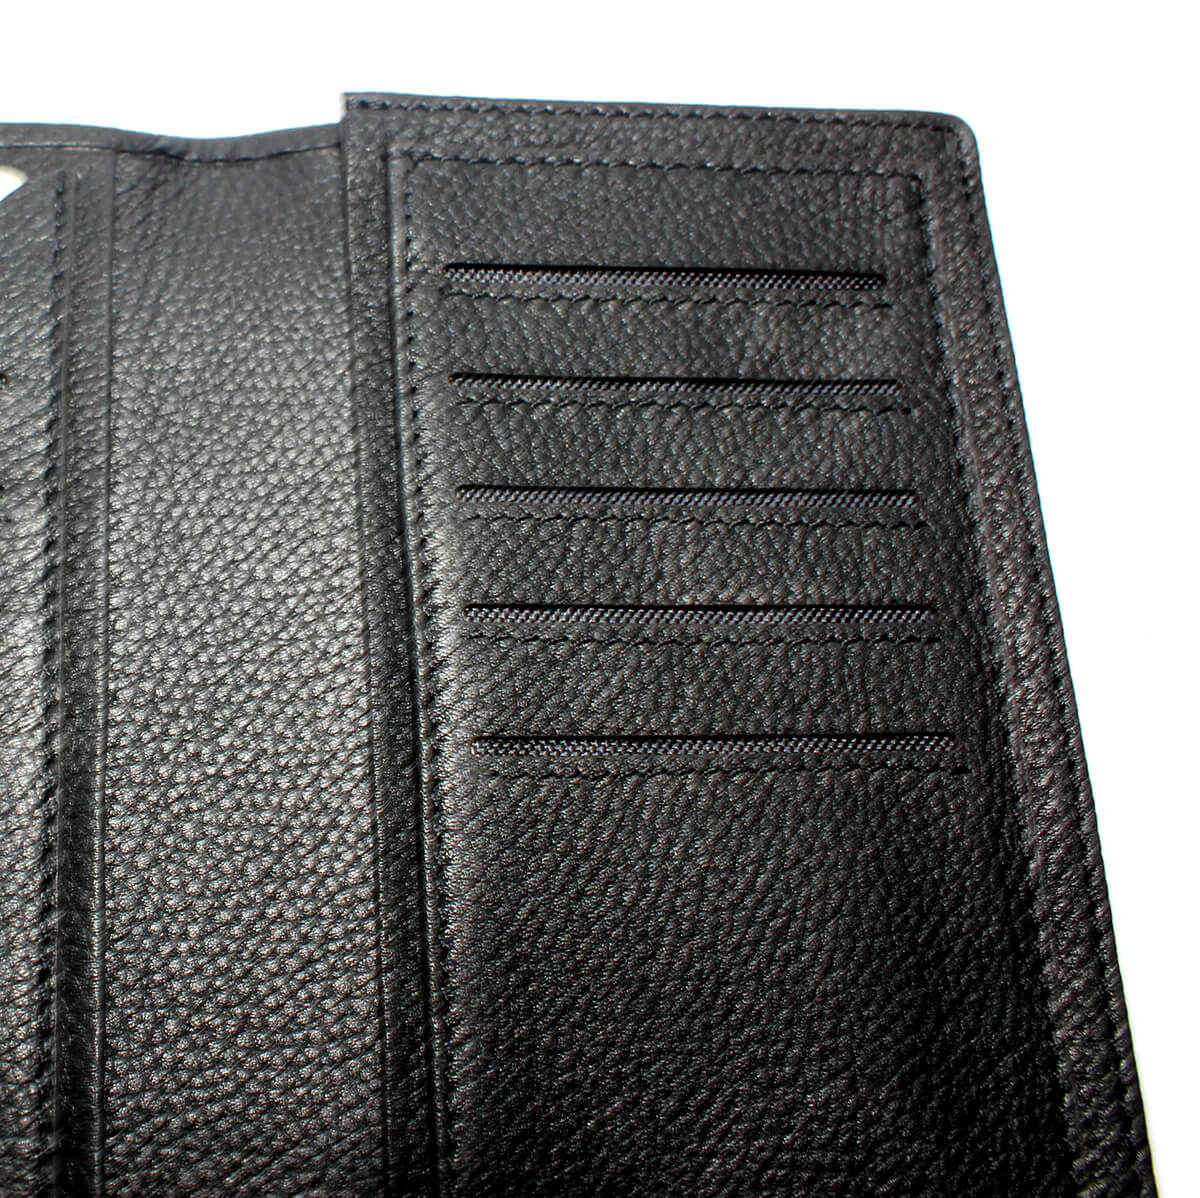 Wenz Genuine Leather Mens Long Wallet Leather Pockets Card Bag Clutch Center Bifold Purse Black